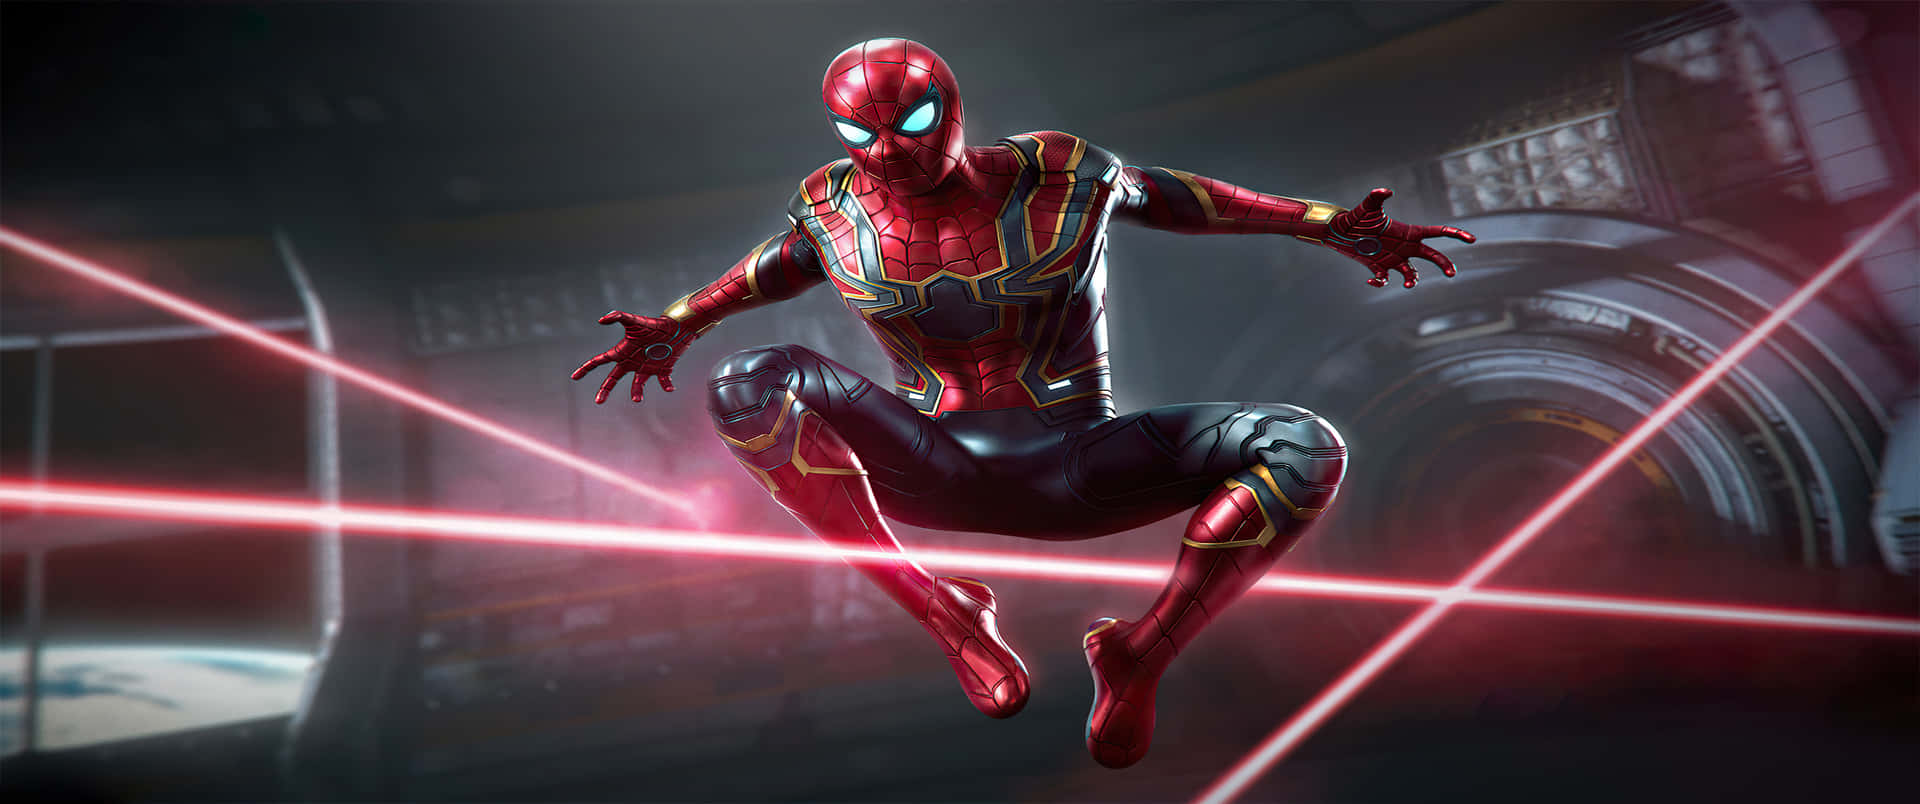 Download Spider Man Jumping On Laser Marvel 3440x1440 Wallpaper | Wallpapers .com